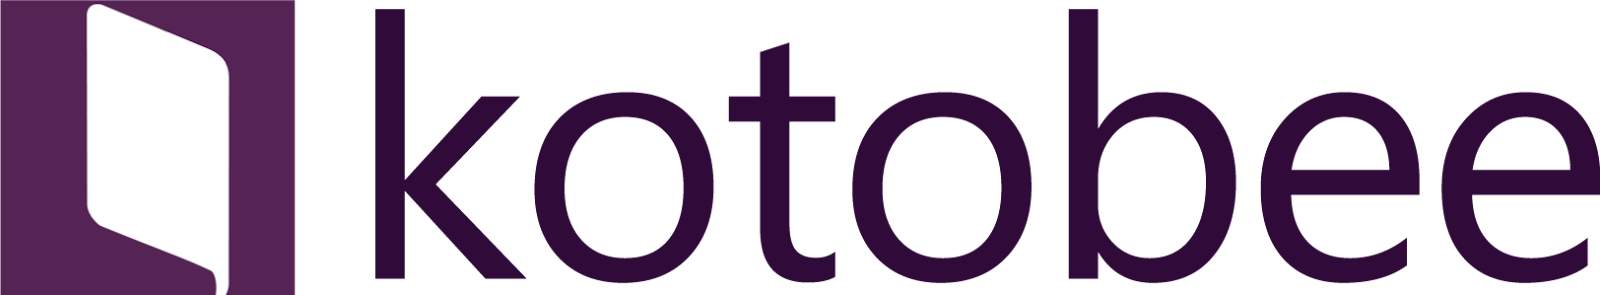 Kotobee Author logo